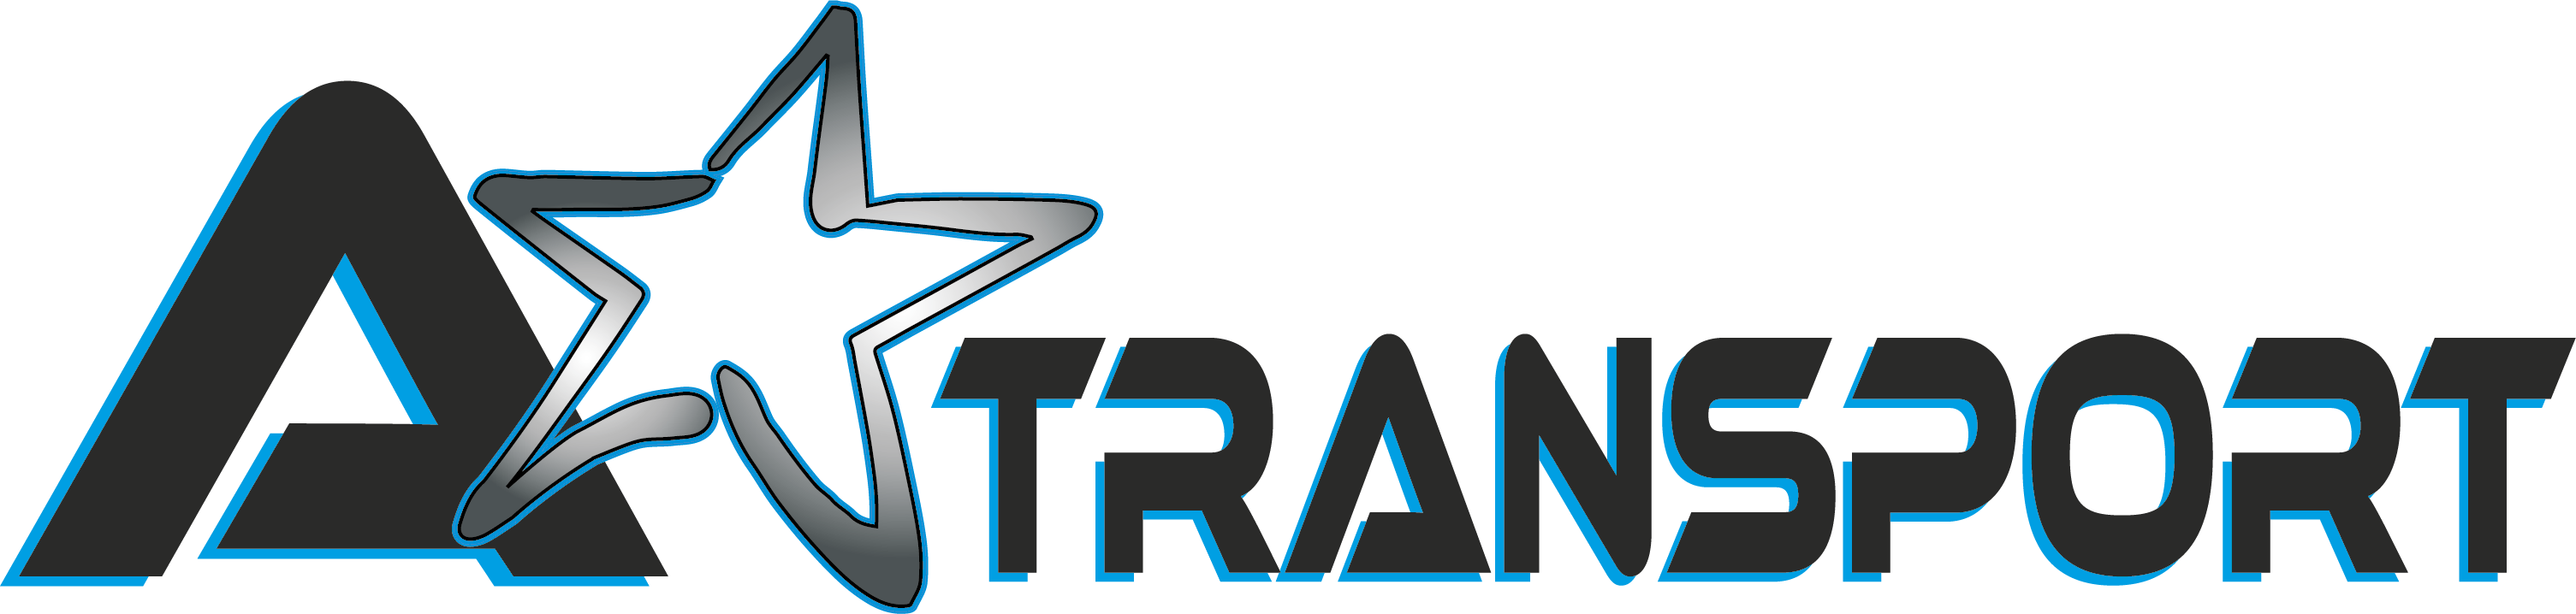 A-Star Transport Logo